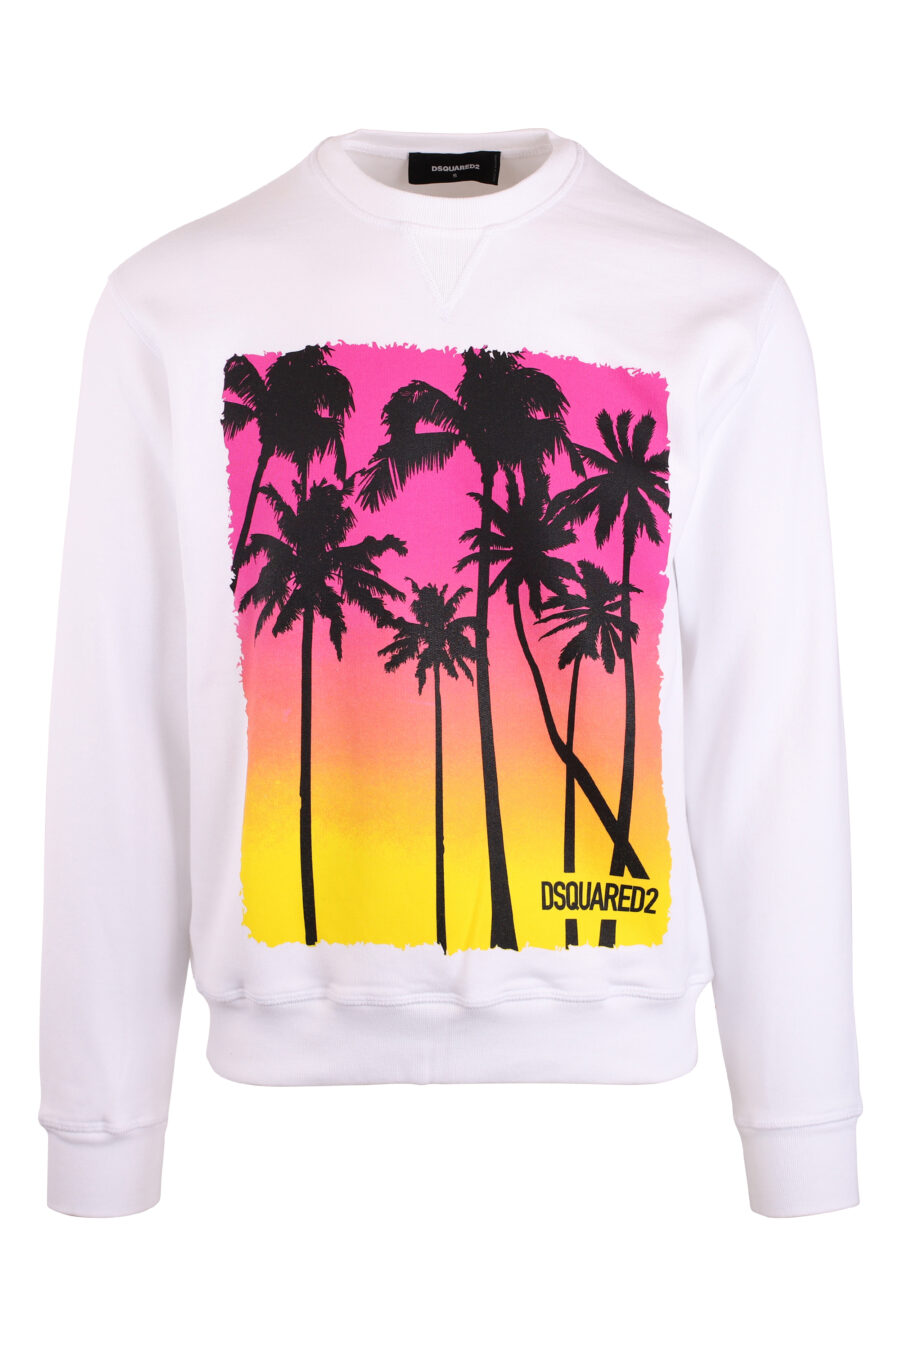 White sweatshirt with sunset palm print - IMG 8900